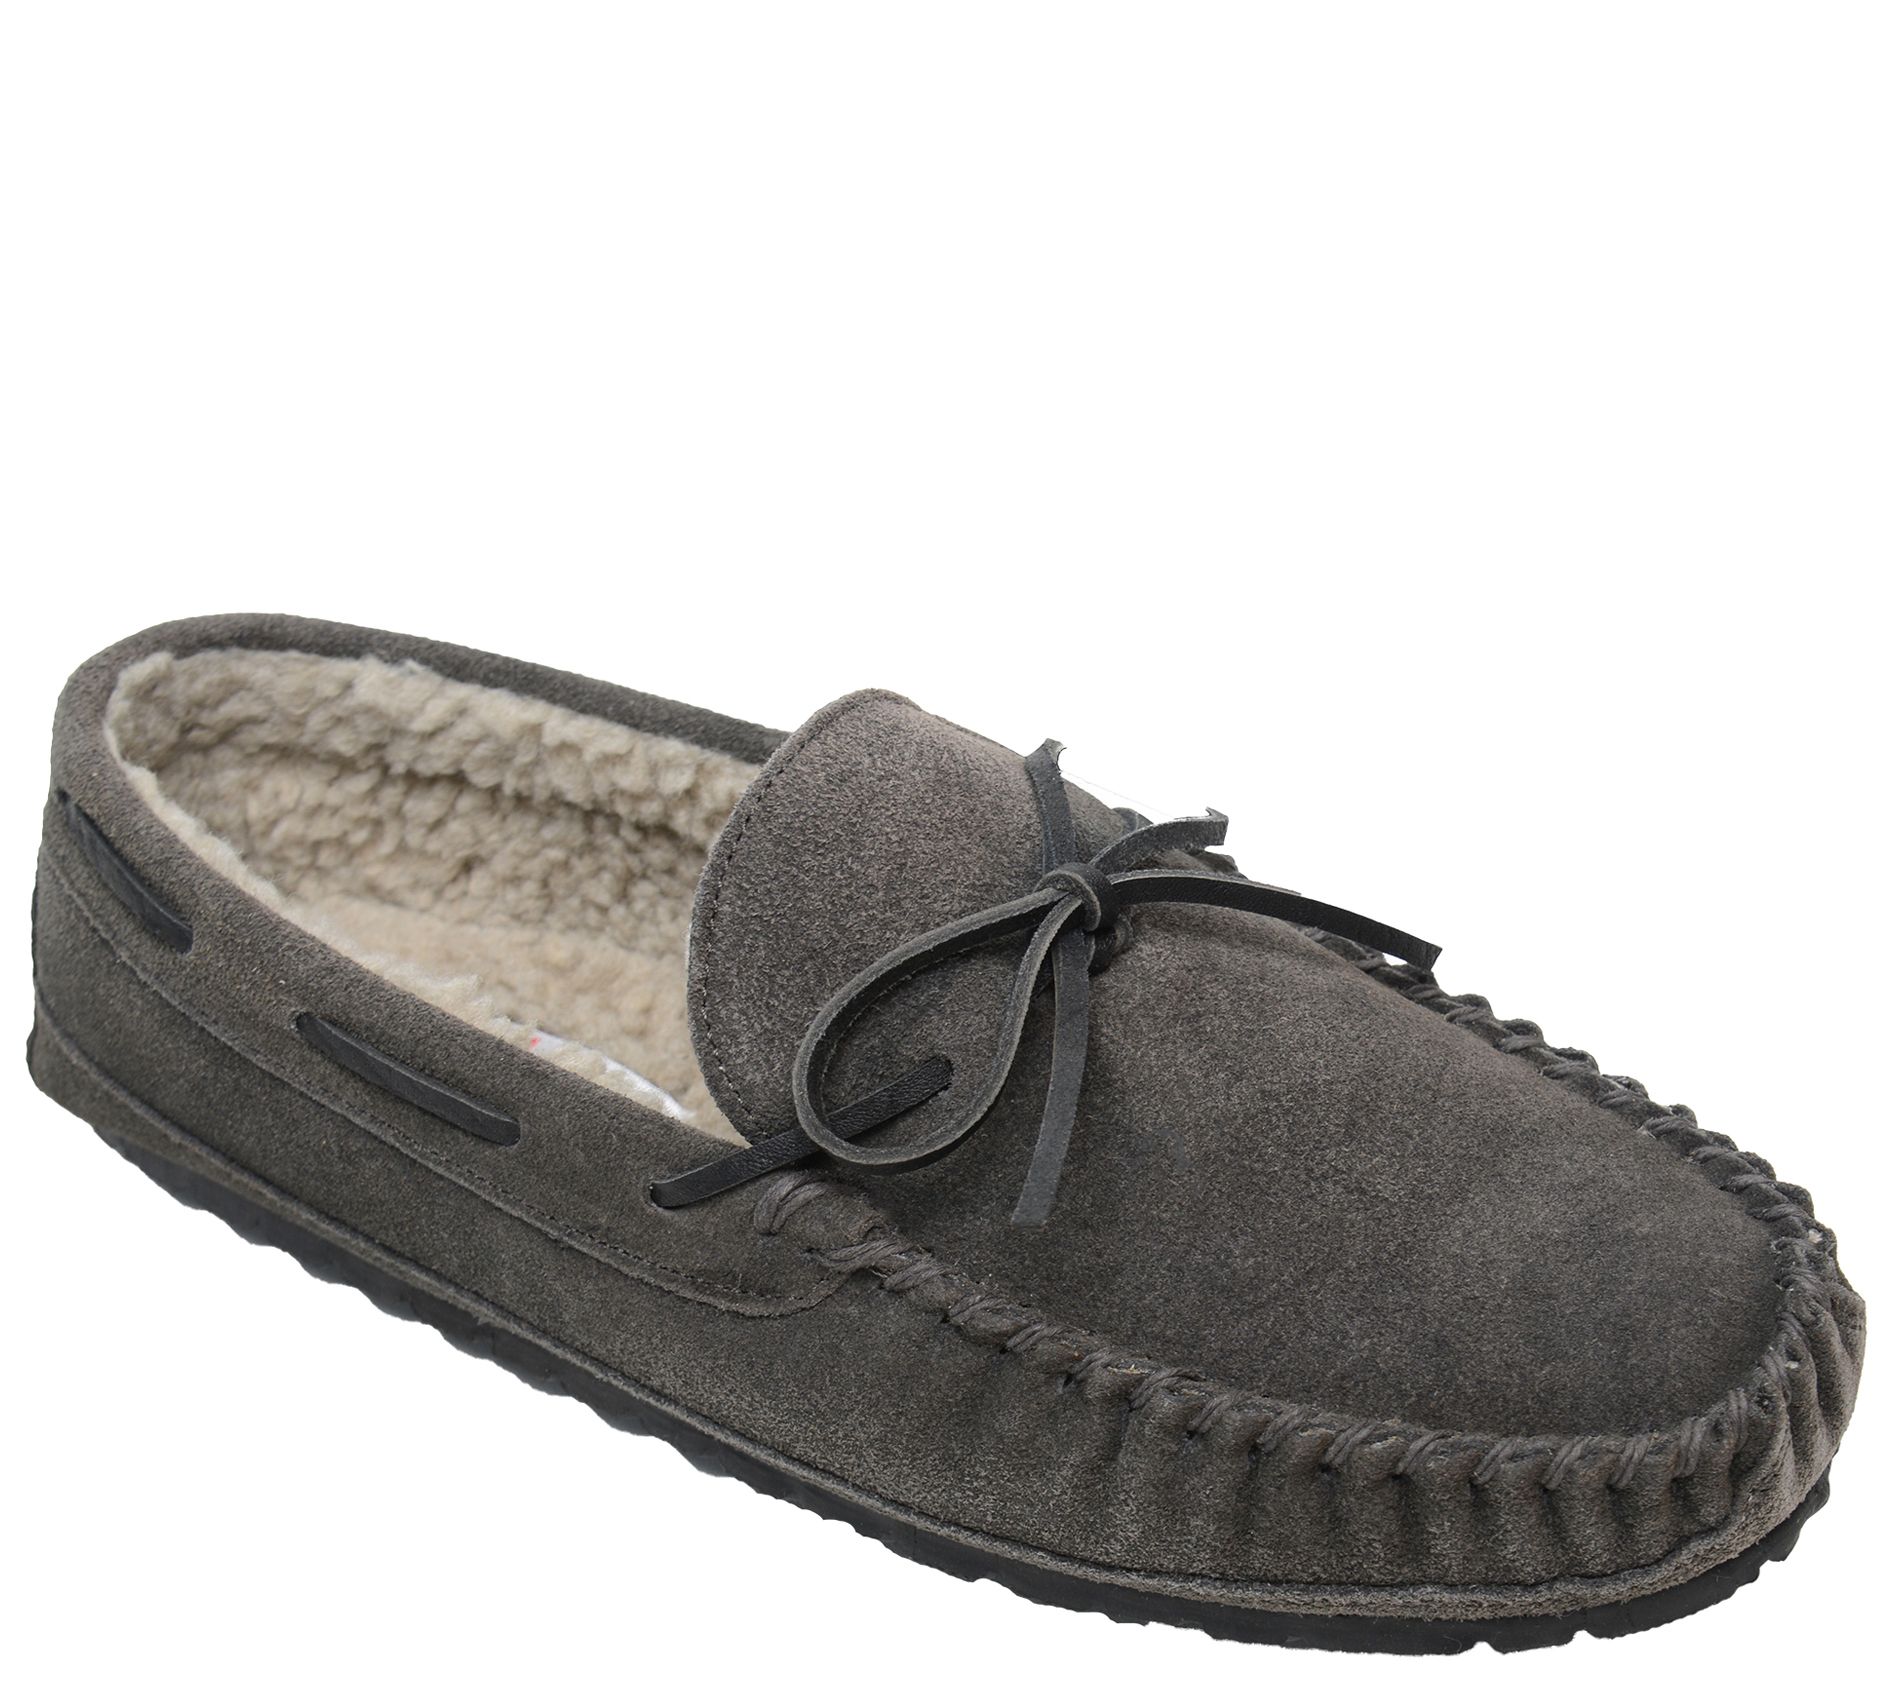 Minnetonka Men's Casey Slip-On Charcoal Moccasin Slippers - QVC.com